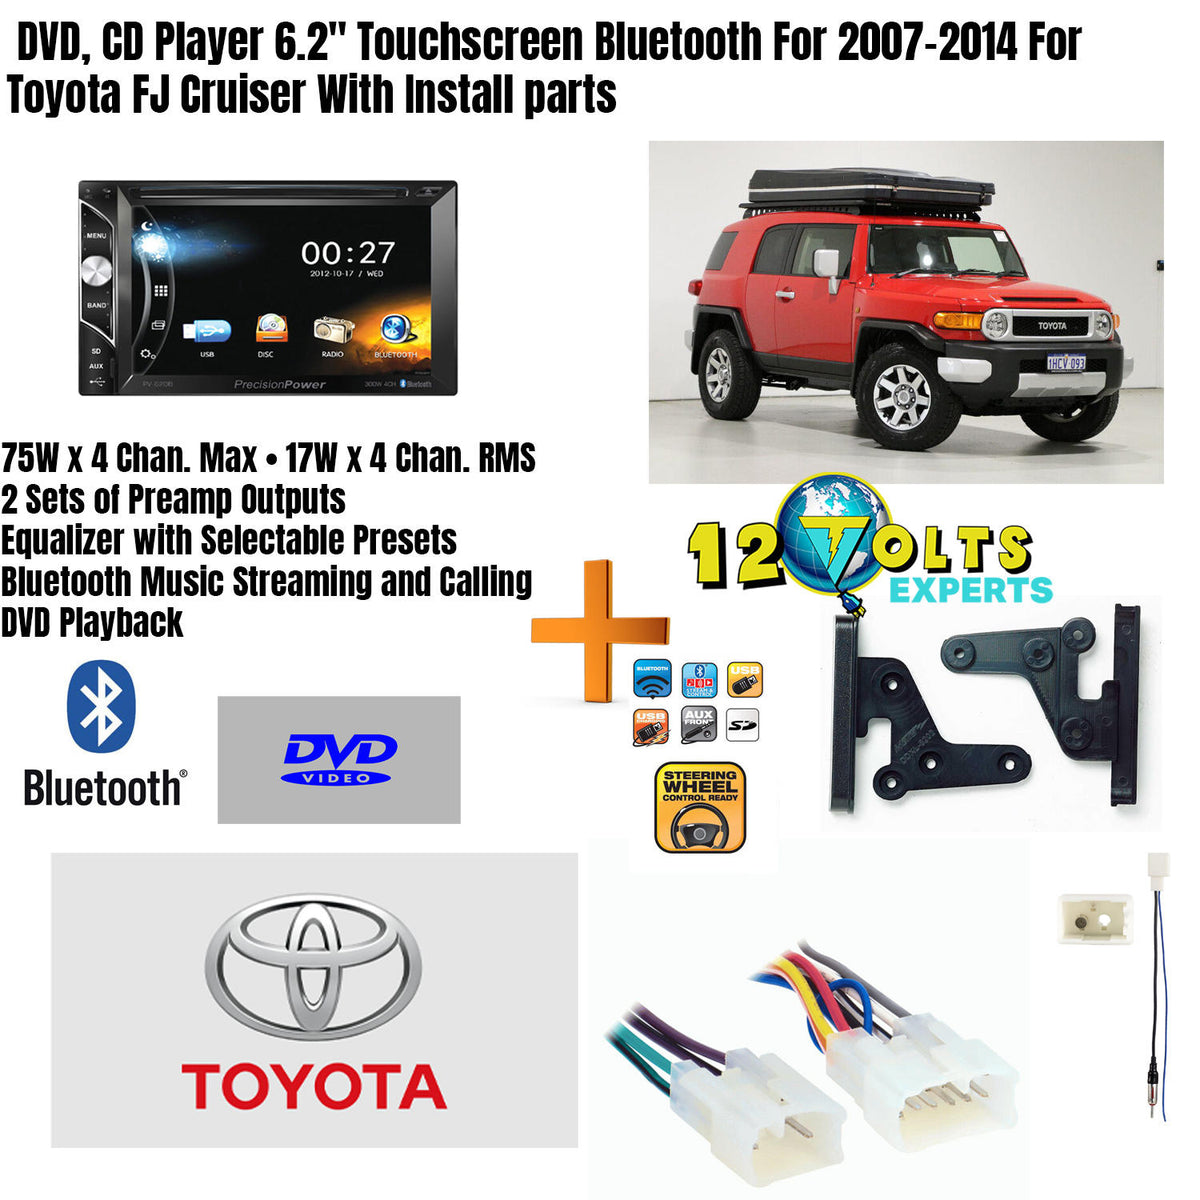 Toyota FJ Cruiser 07-14 Double-DIN, DVD Player 6.2" Touchscreen Bluetooth Radio!